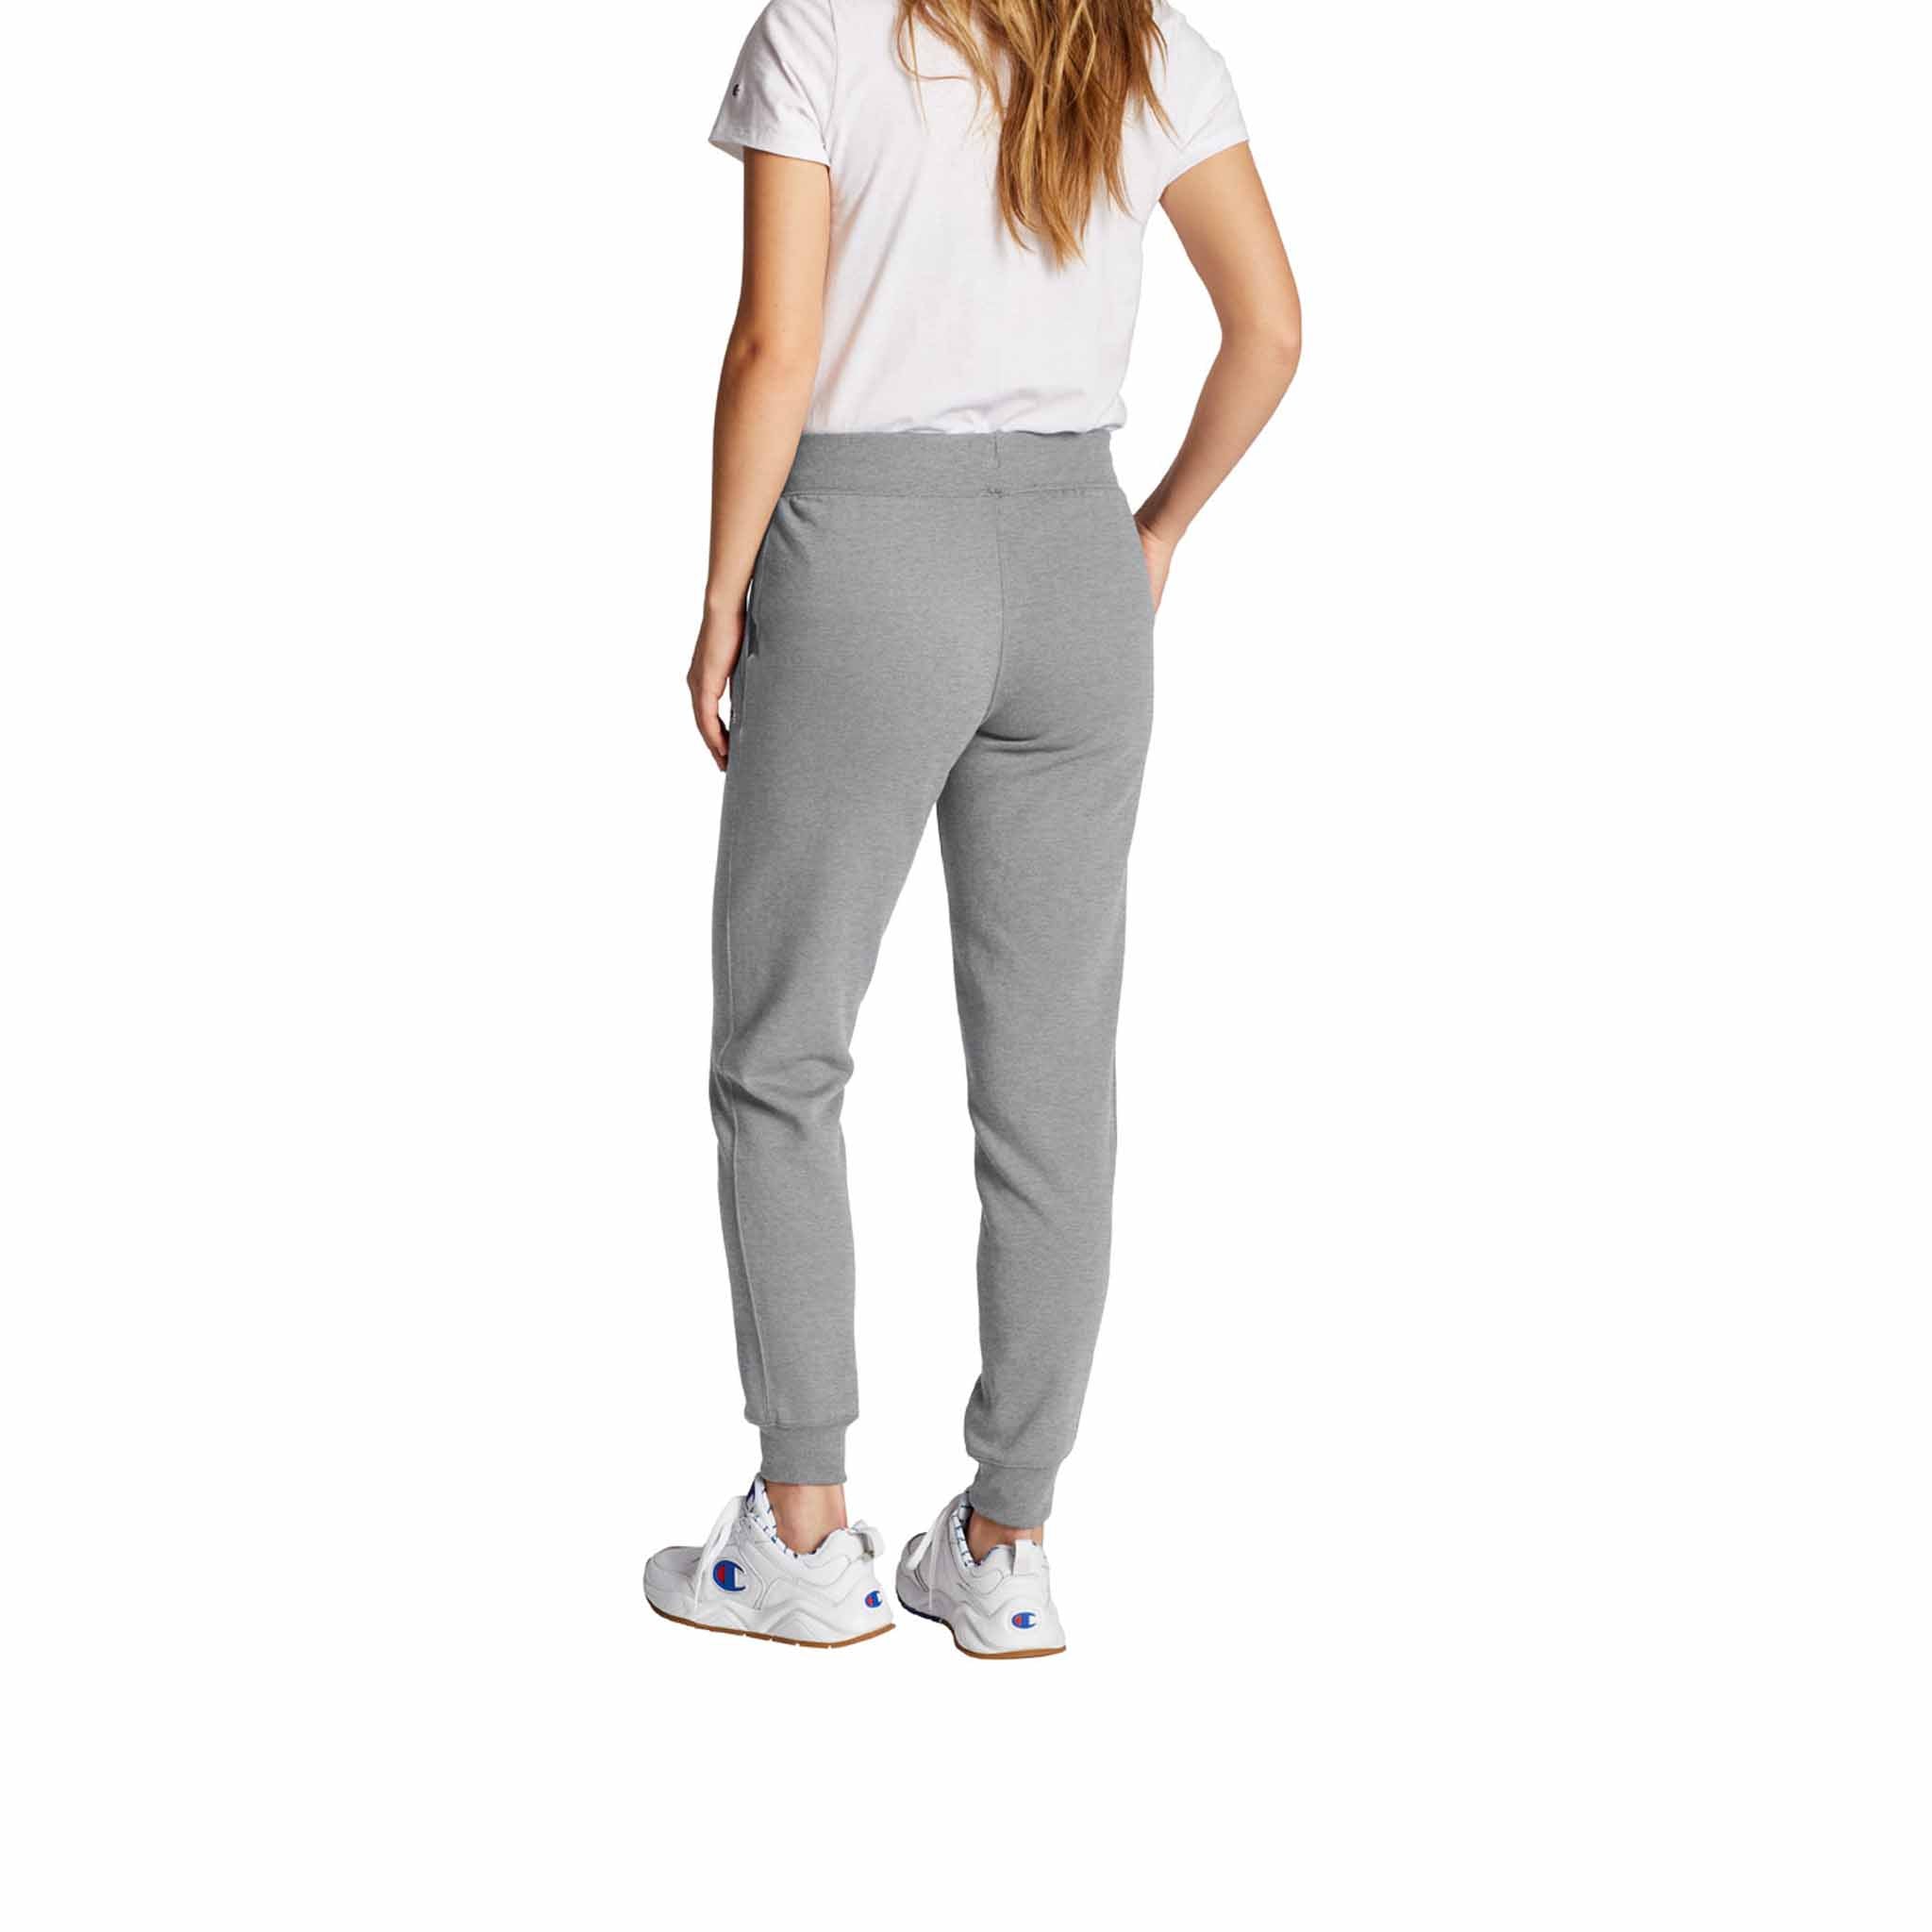 Pantalons Femme : joggings, en molleton, slim, shorts